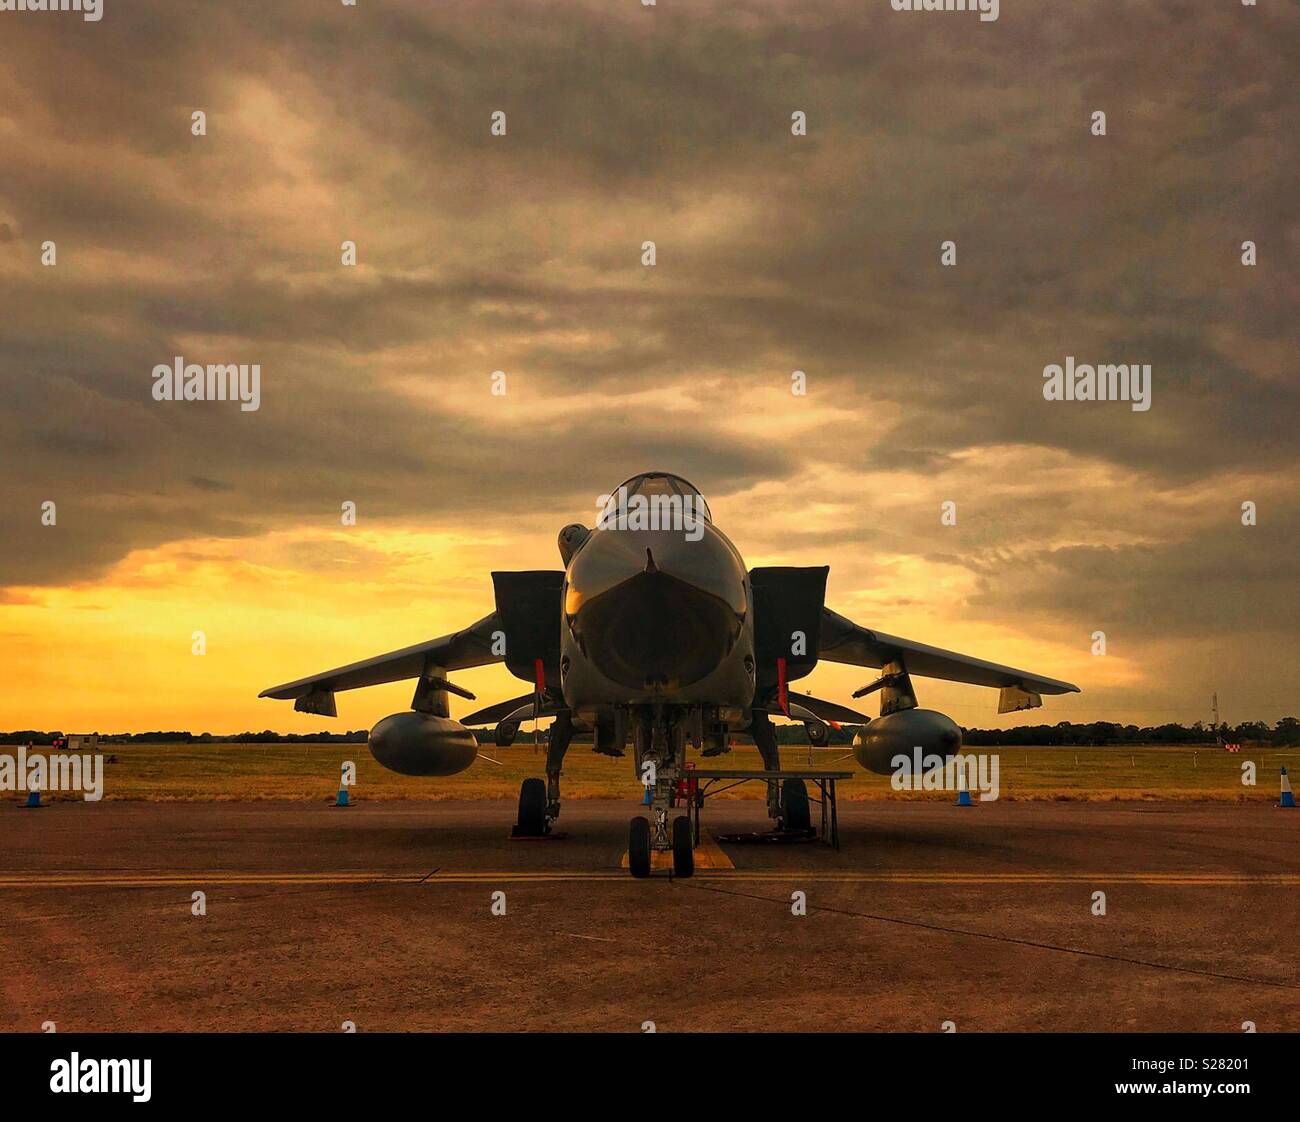 Tornado fighter jet at dusk Stock Photo